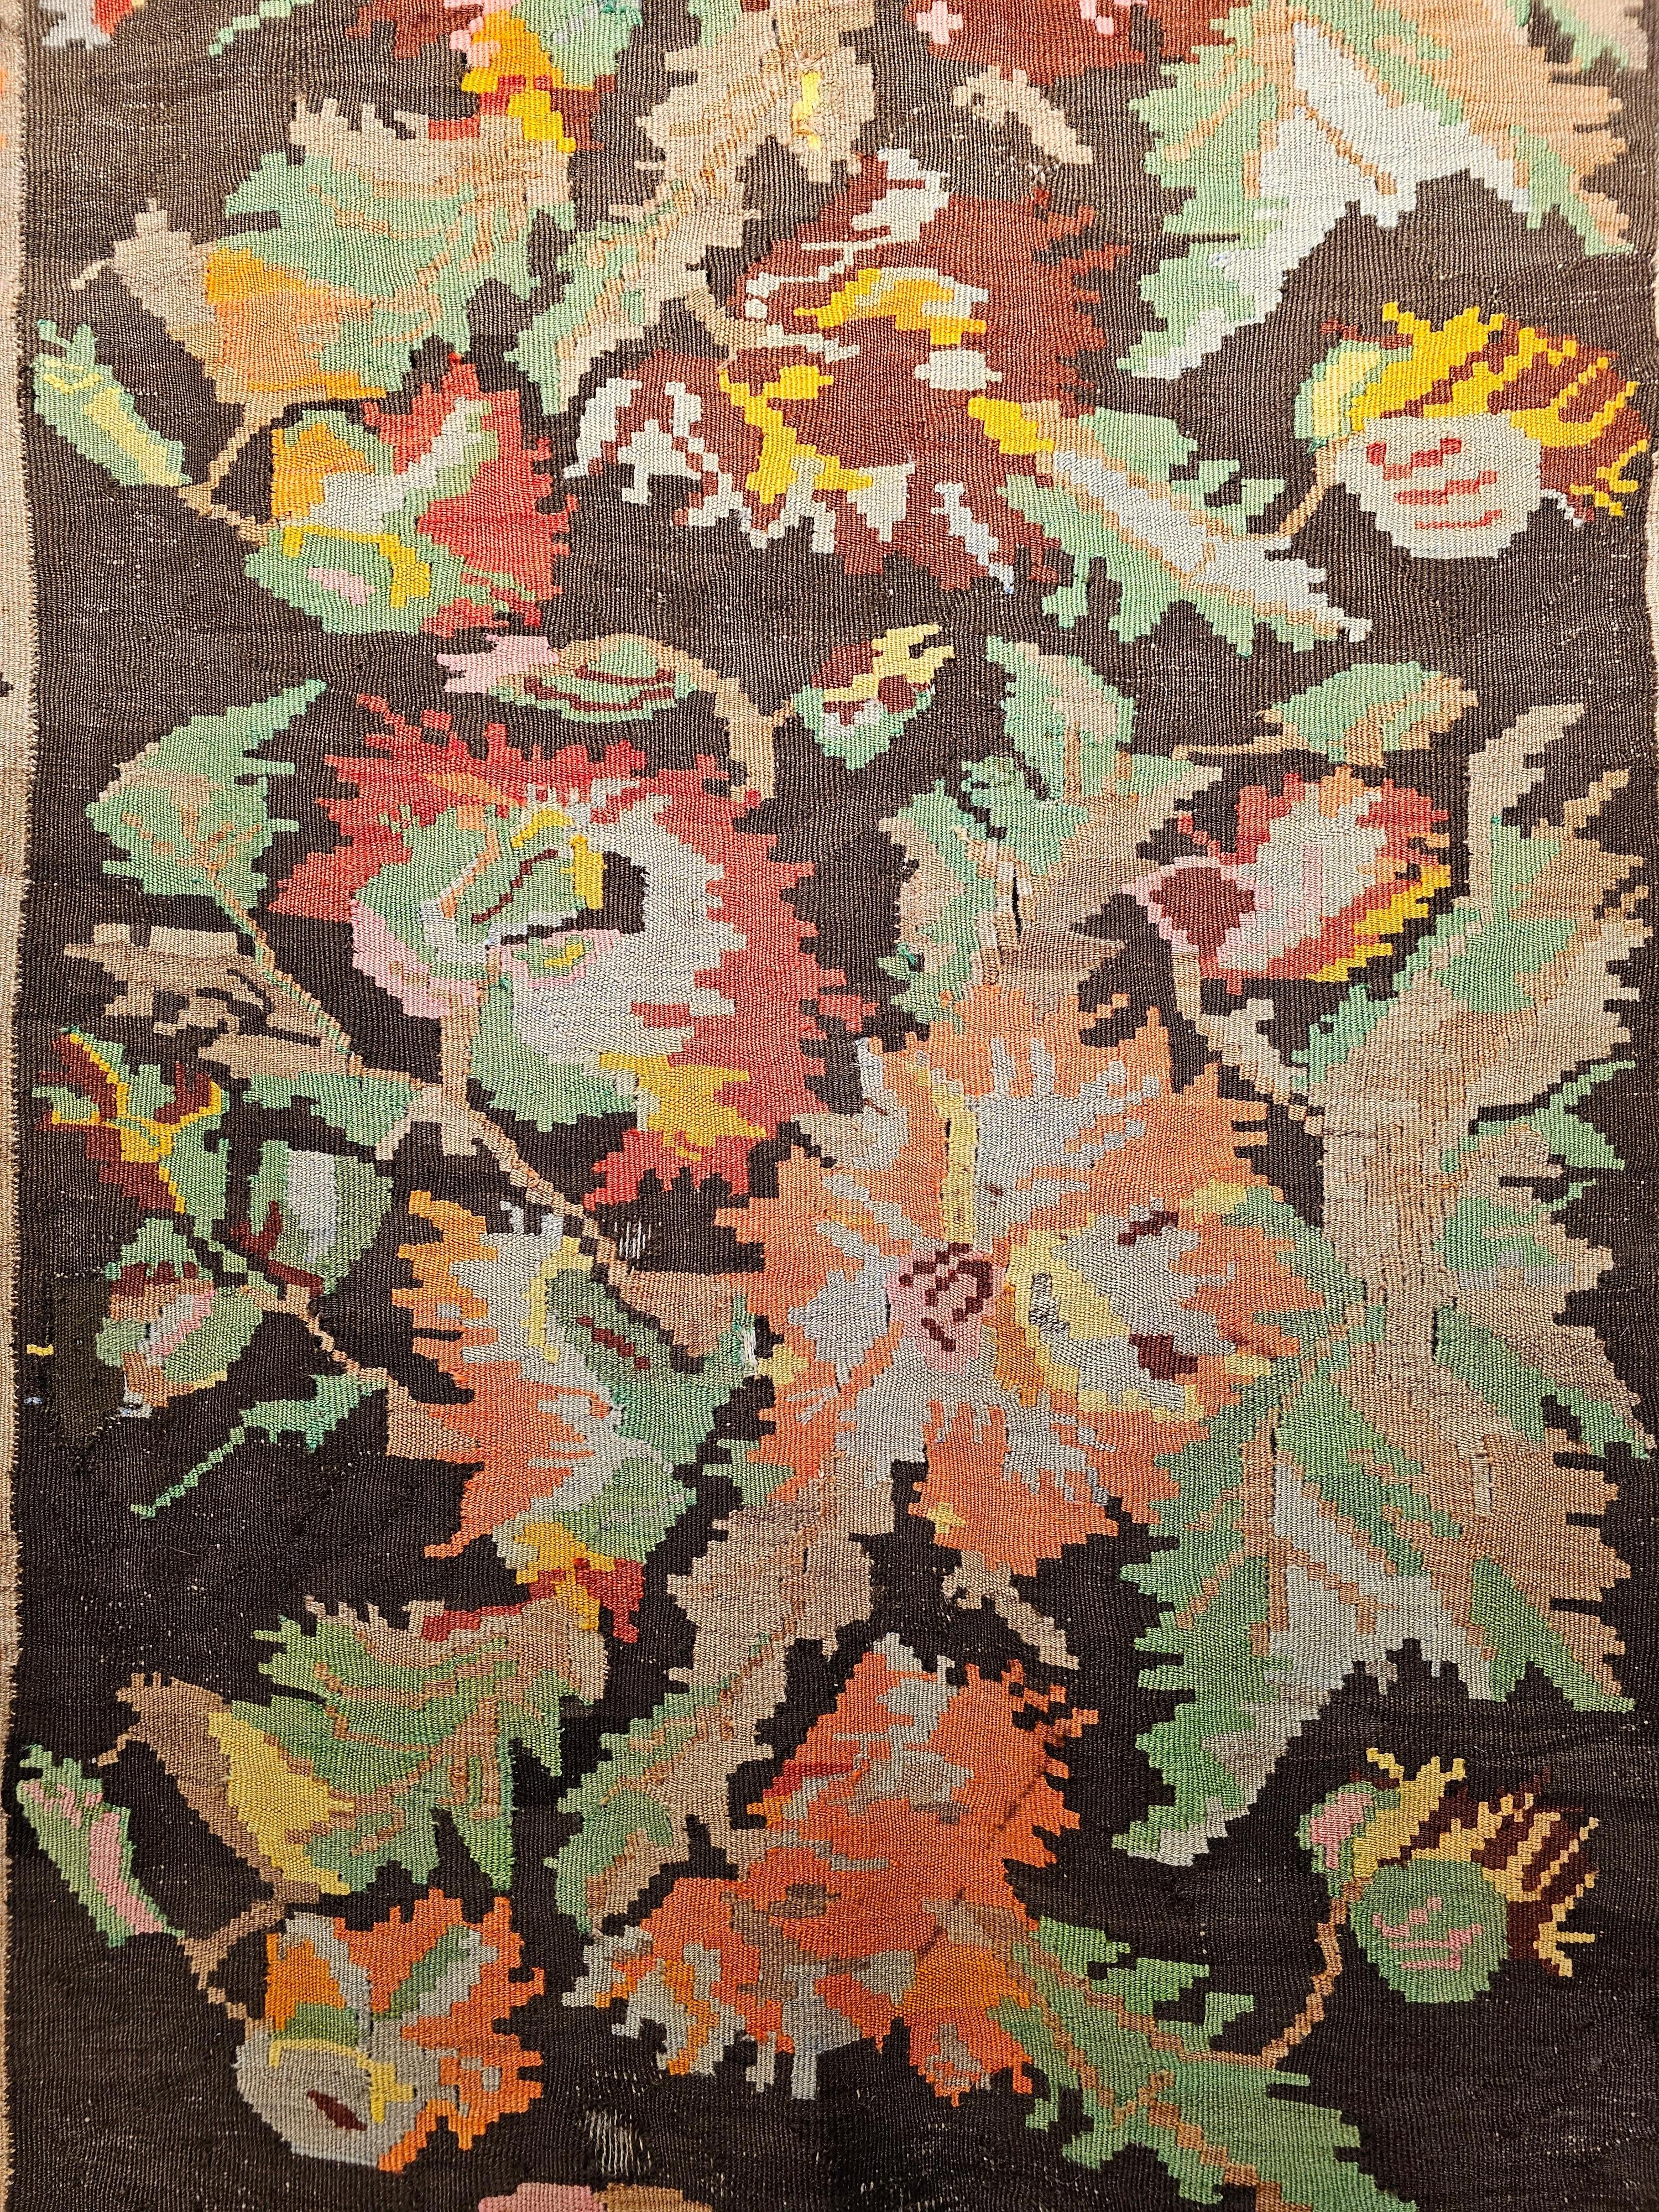 Hand-Woven Vintage Karabagh Kilim Runner with Large Floral Designs and Vibrant Colors For Sale